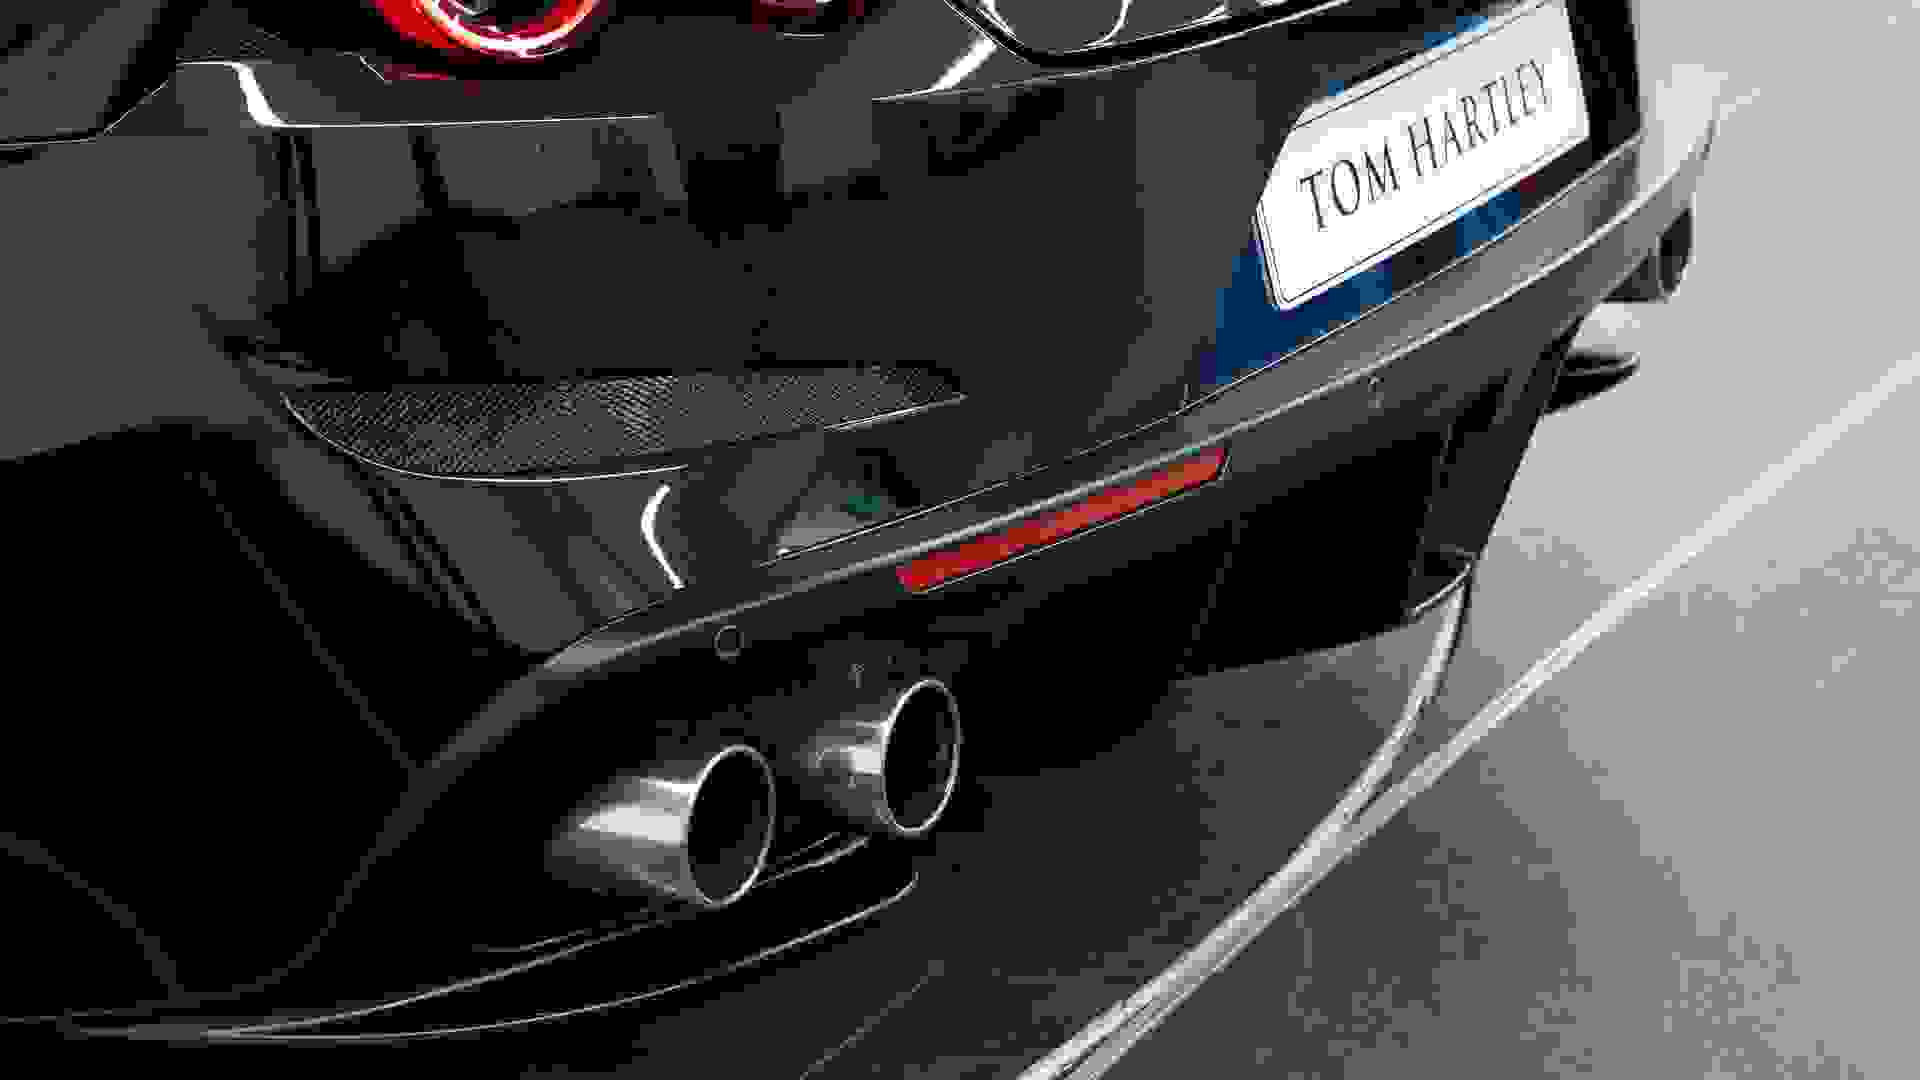 Ferrari GTC4 LUSSO T Photo 4952bf24-997d-43fe-b57c-7aac7be76807.jpg